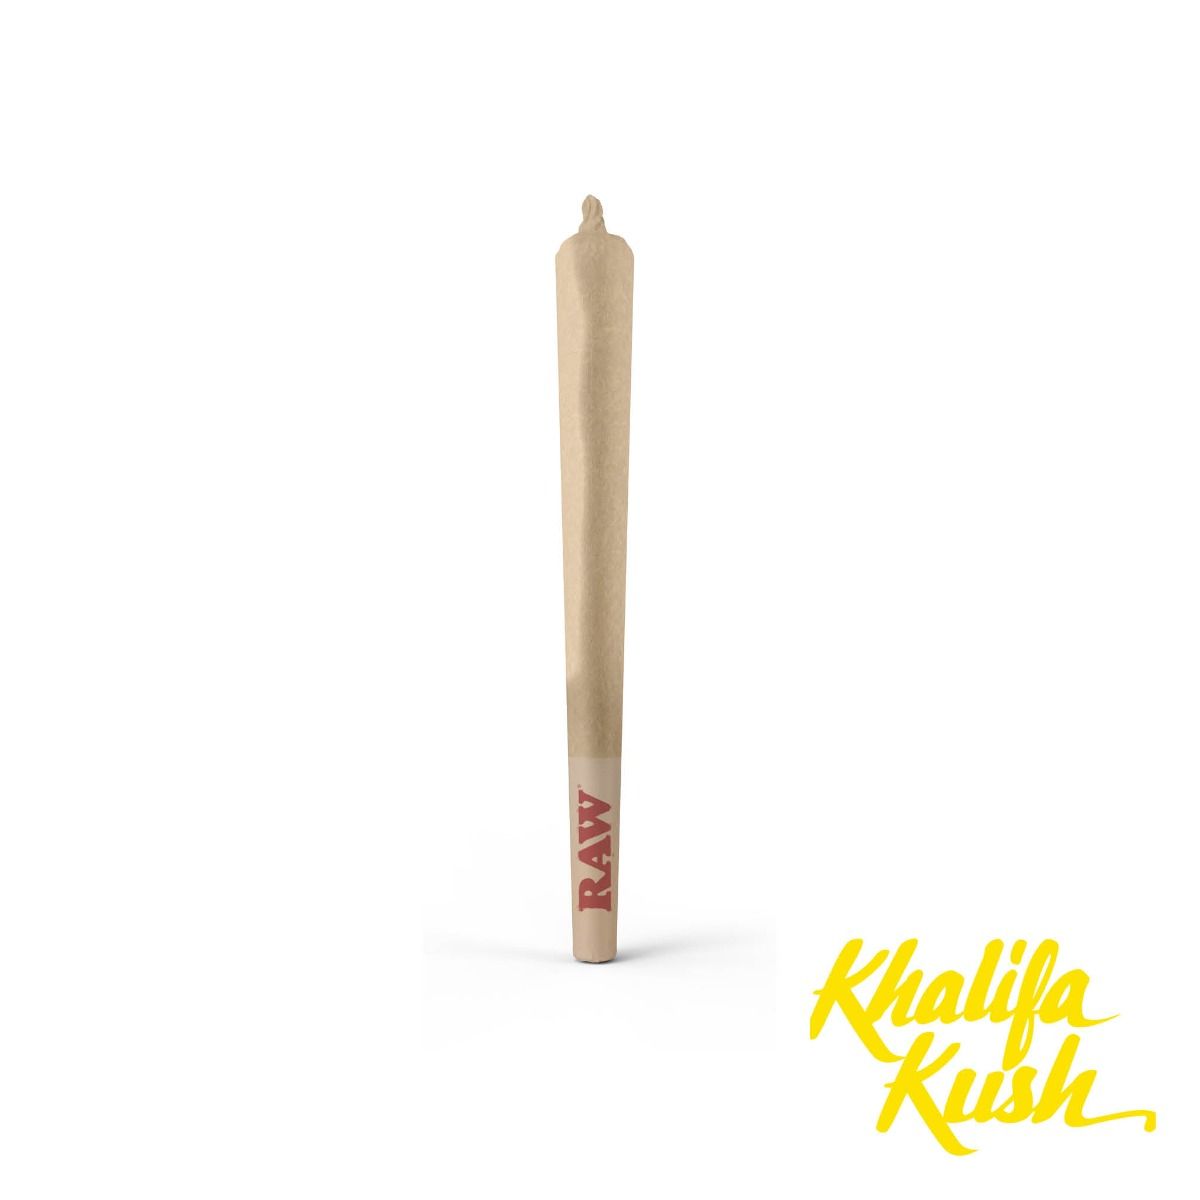 Khalifa Kush - Single PreRoll 1G